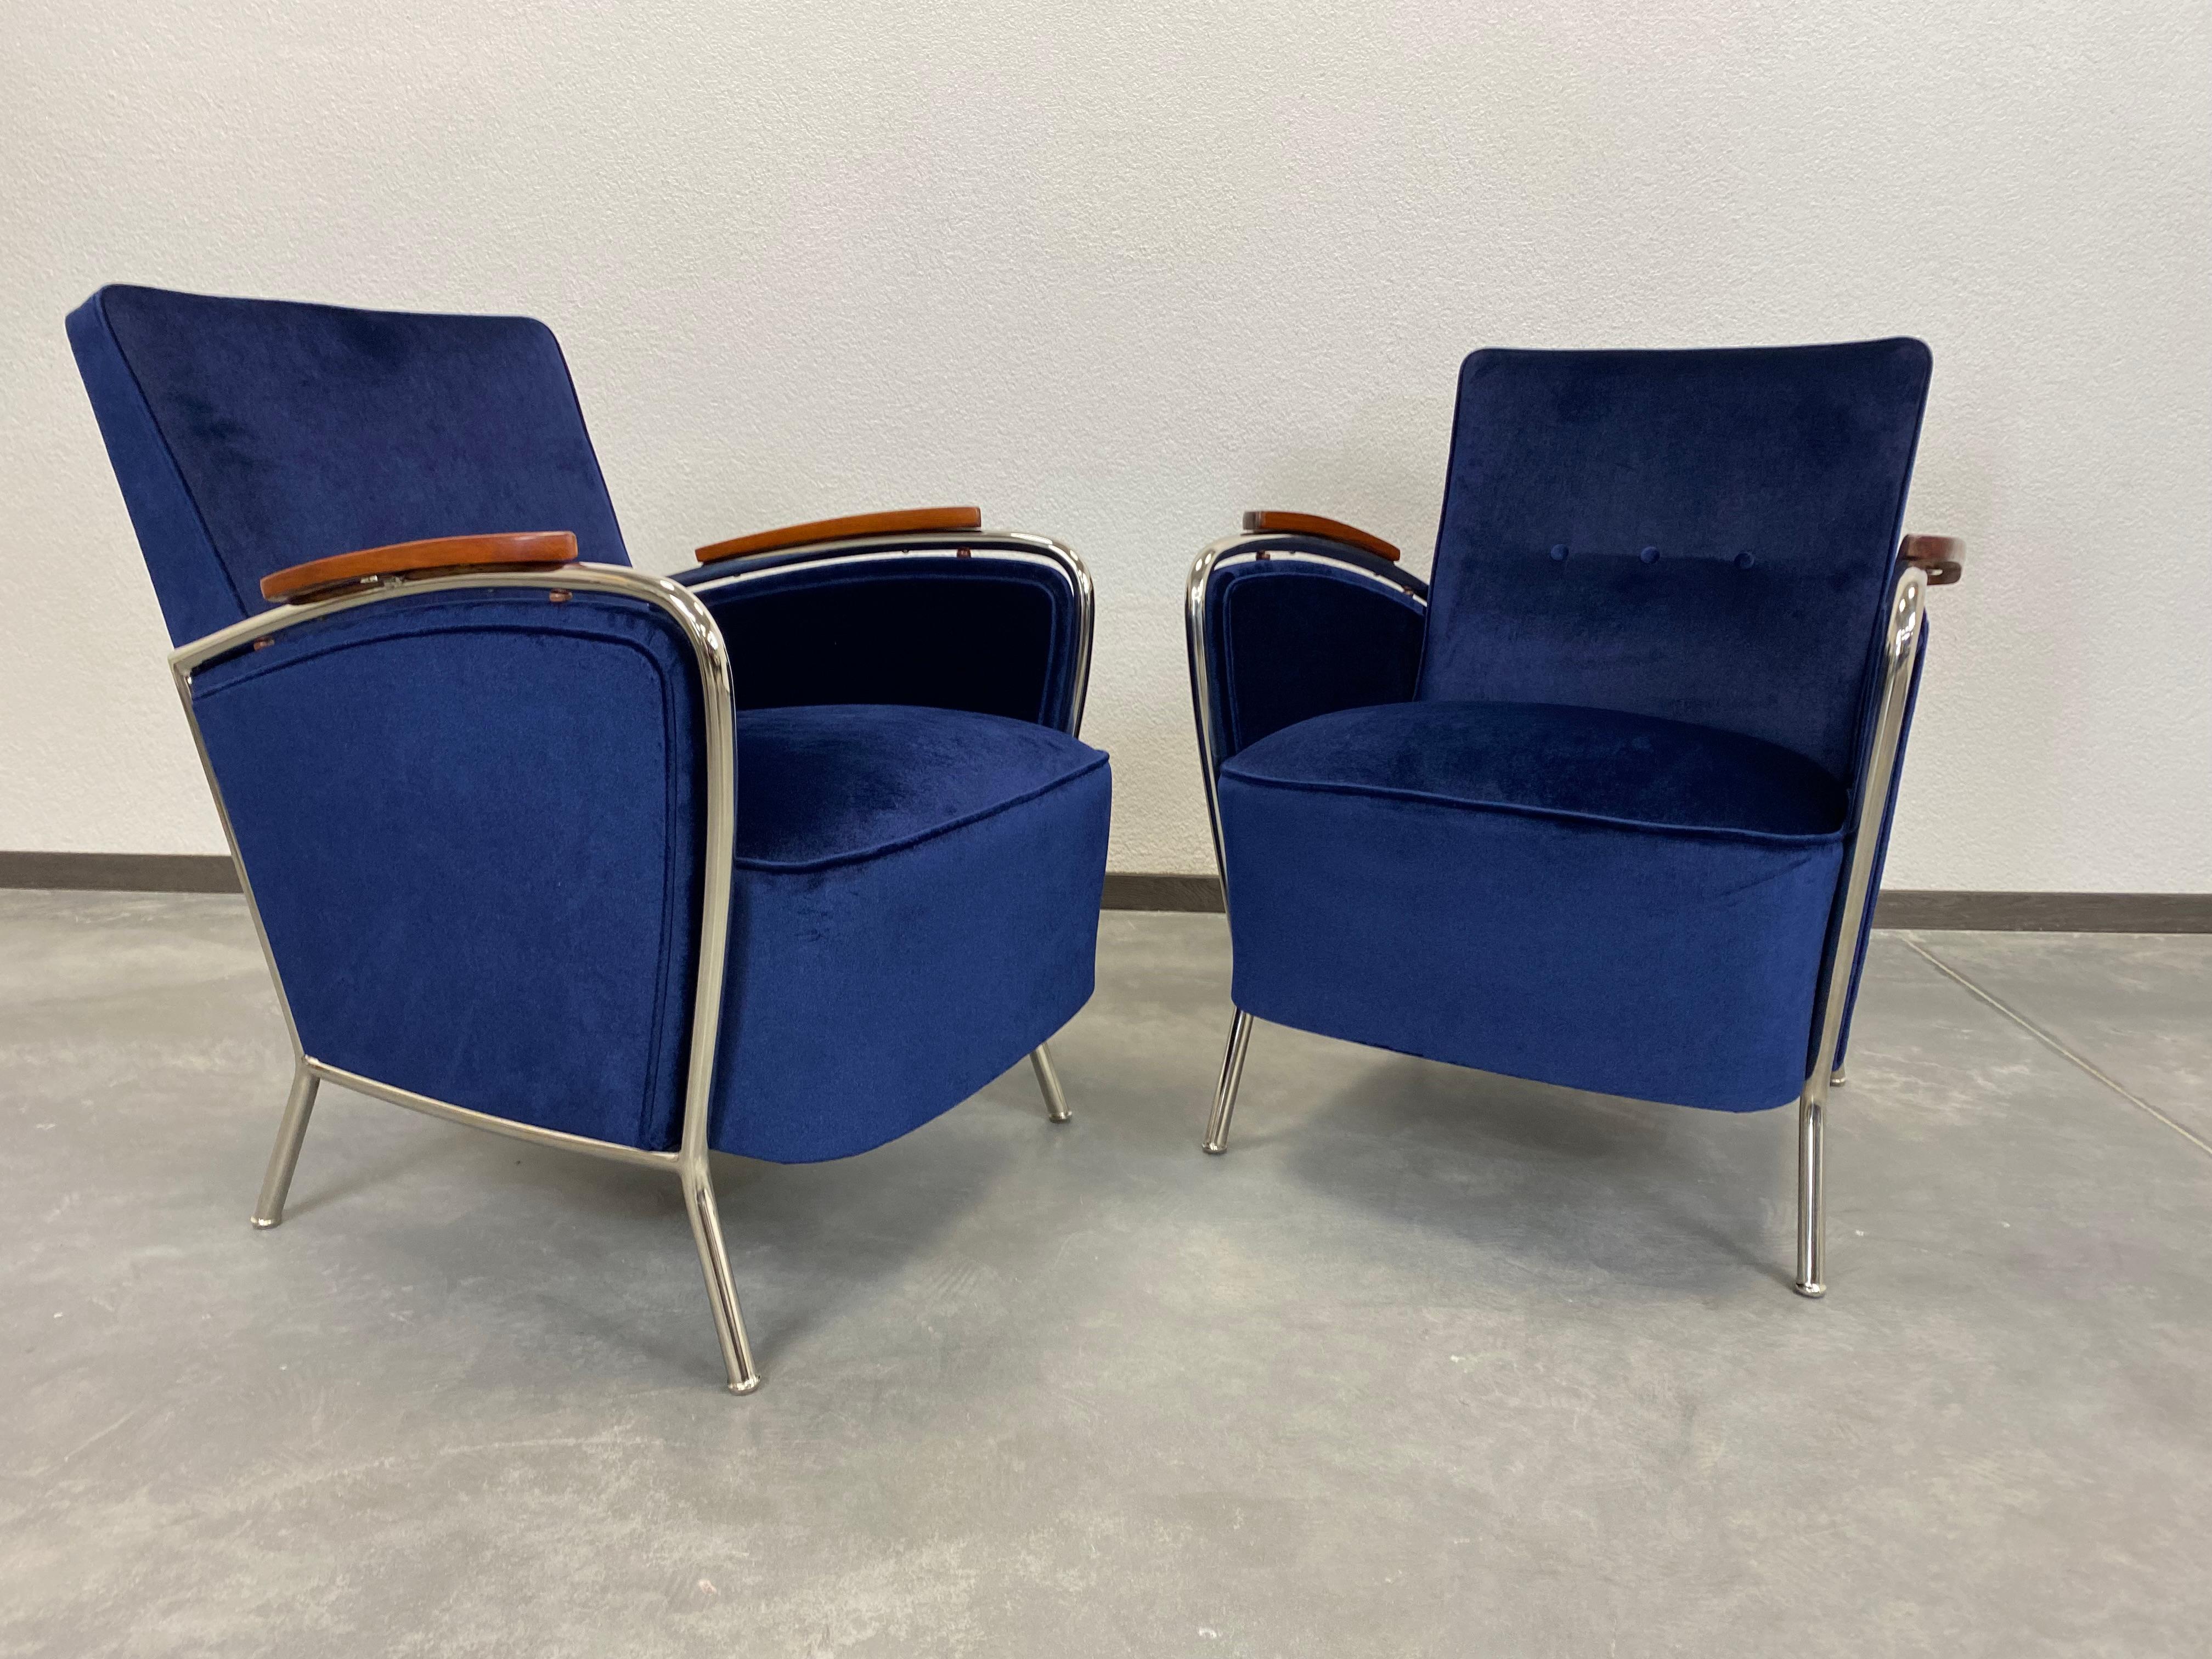 Elegant blue chrome armchairs Jozsef Peresztegi after complete refurbishment new chrome plating, dark blue fabric.